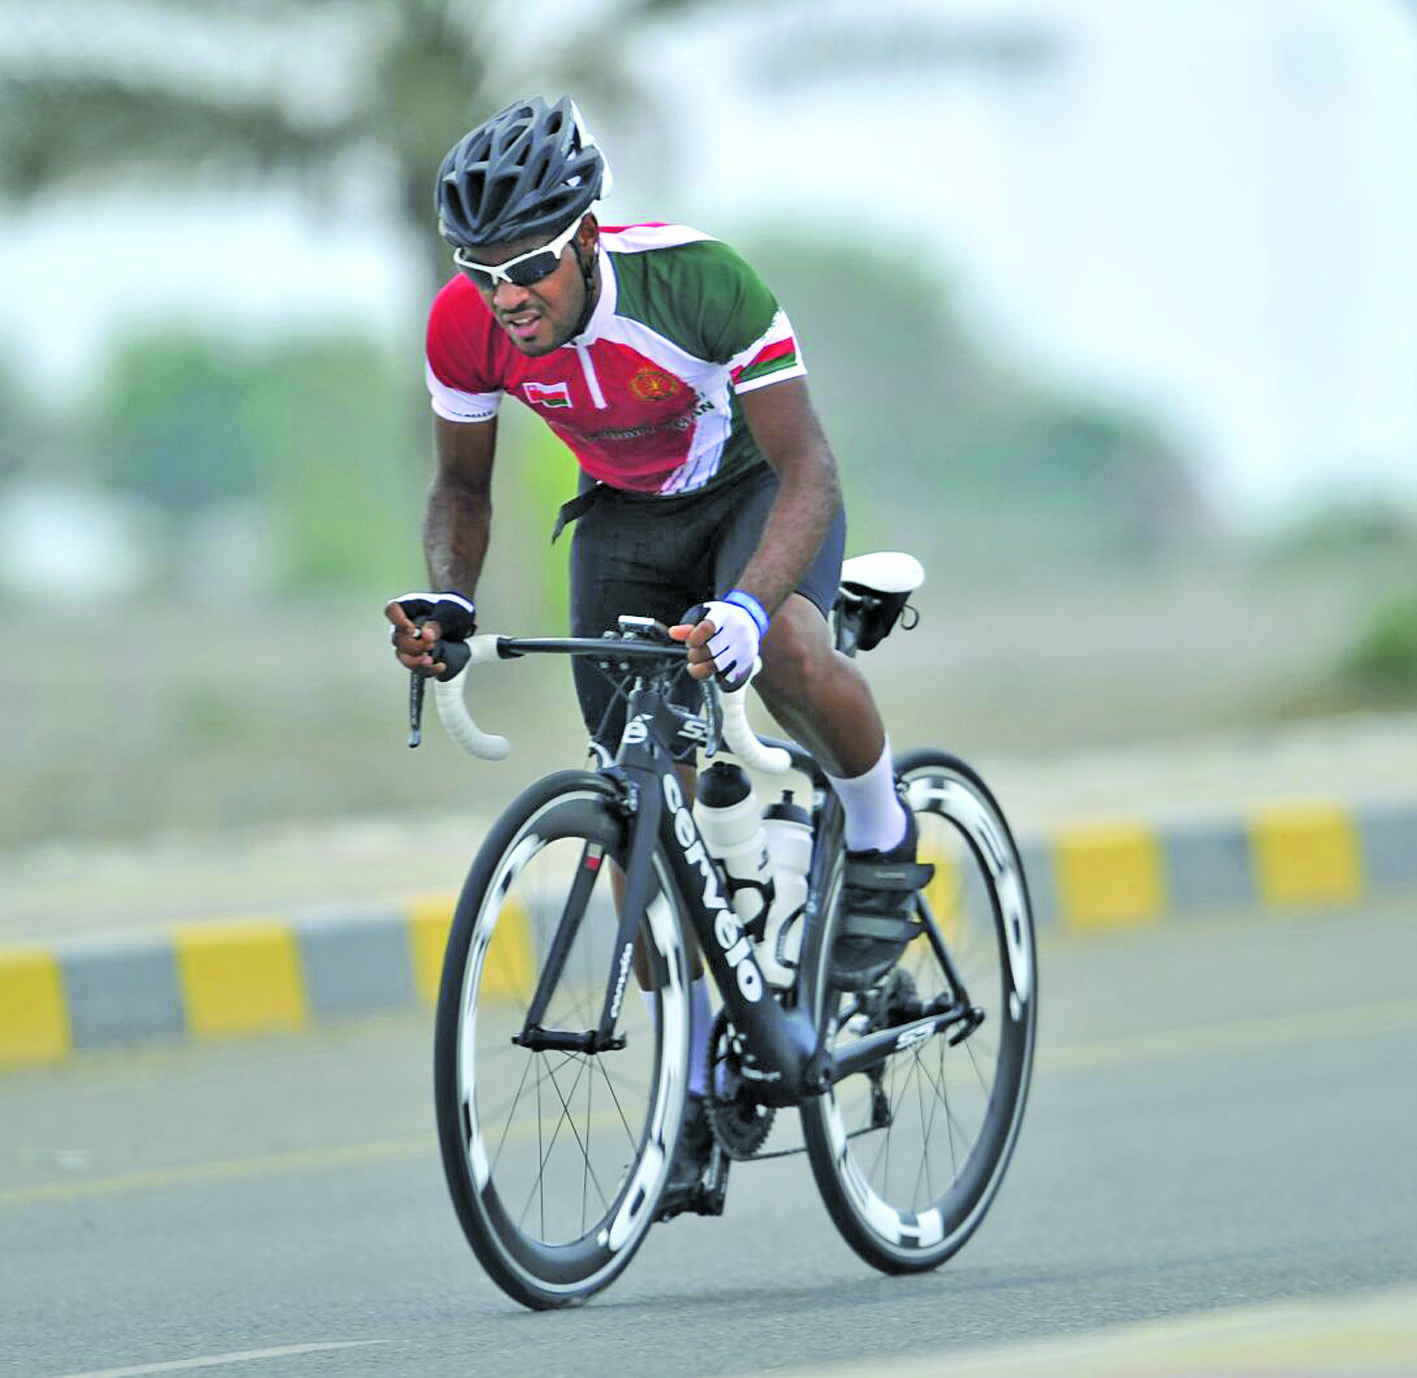 Millennium Triathlon: Royal Army of Oman teams, Bahraini athletes dominate